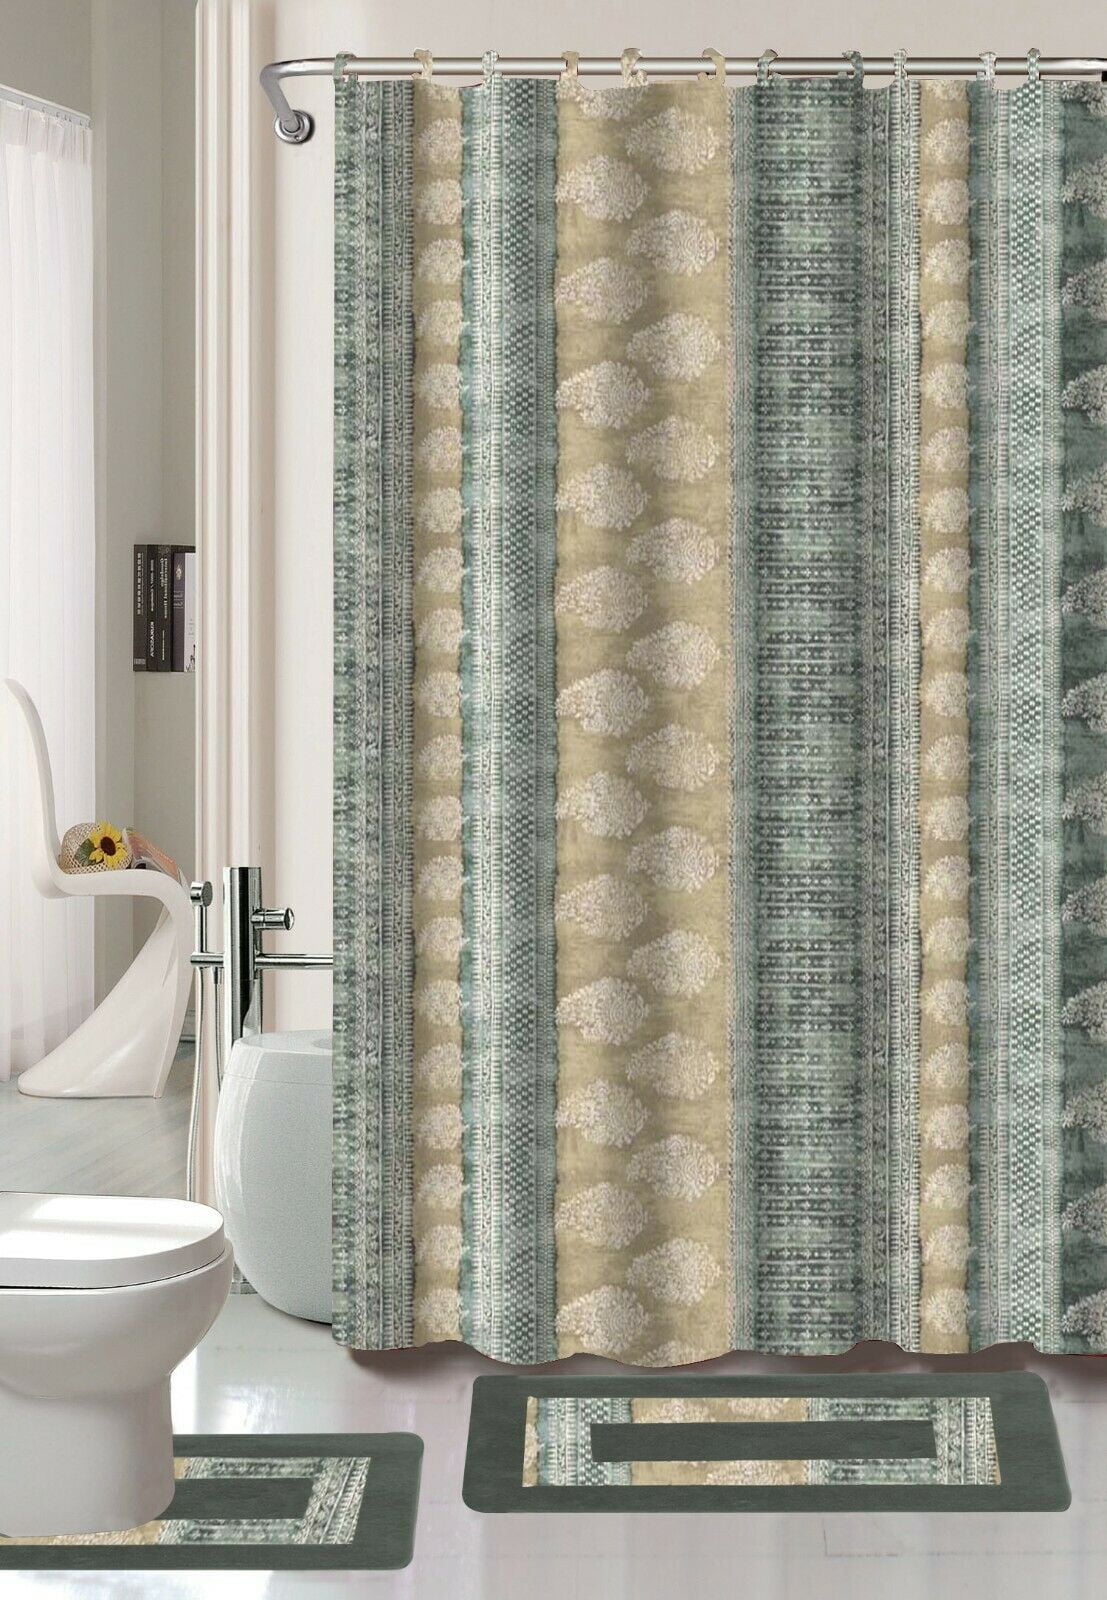 Dogs Icons Bathroom Doormat Waterproof Fabric Shower Curtain Set Home Decor 